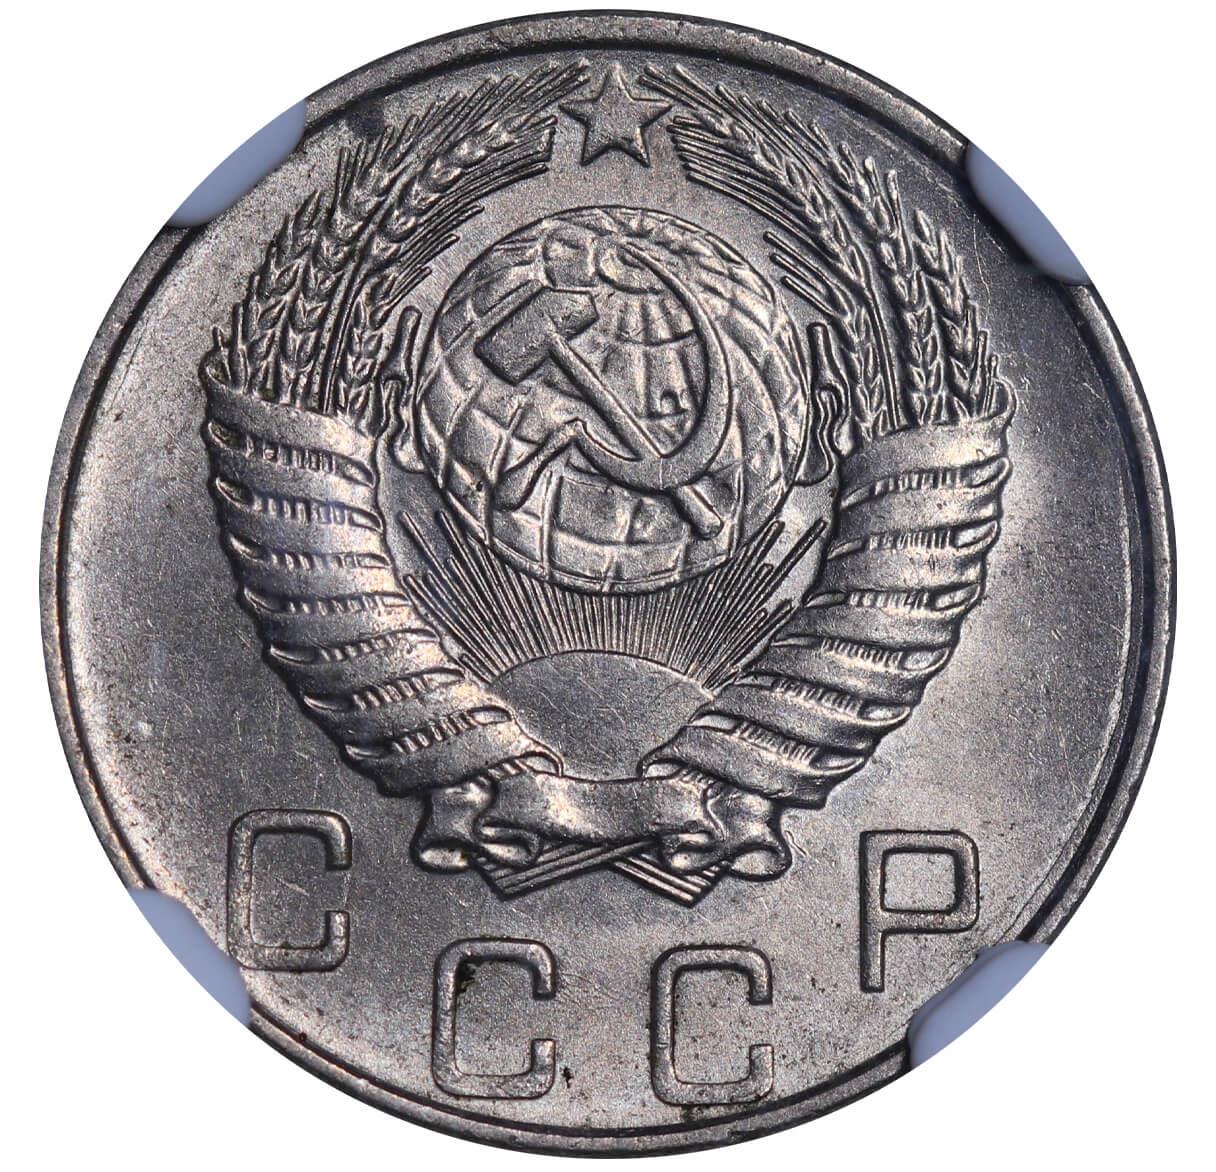 Soviet Union, 10 Kopecks, 1956 year, NGC, MS 63 - Image 2 of 3